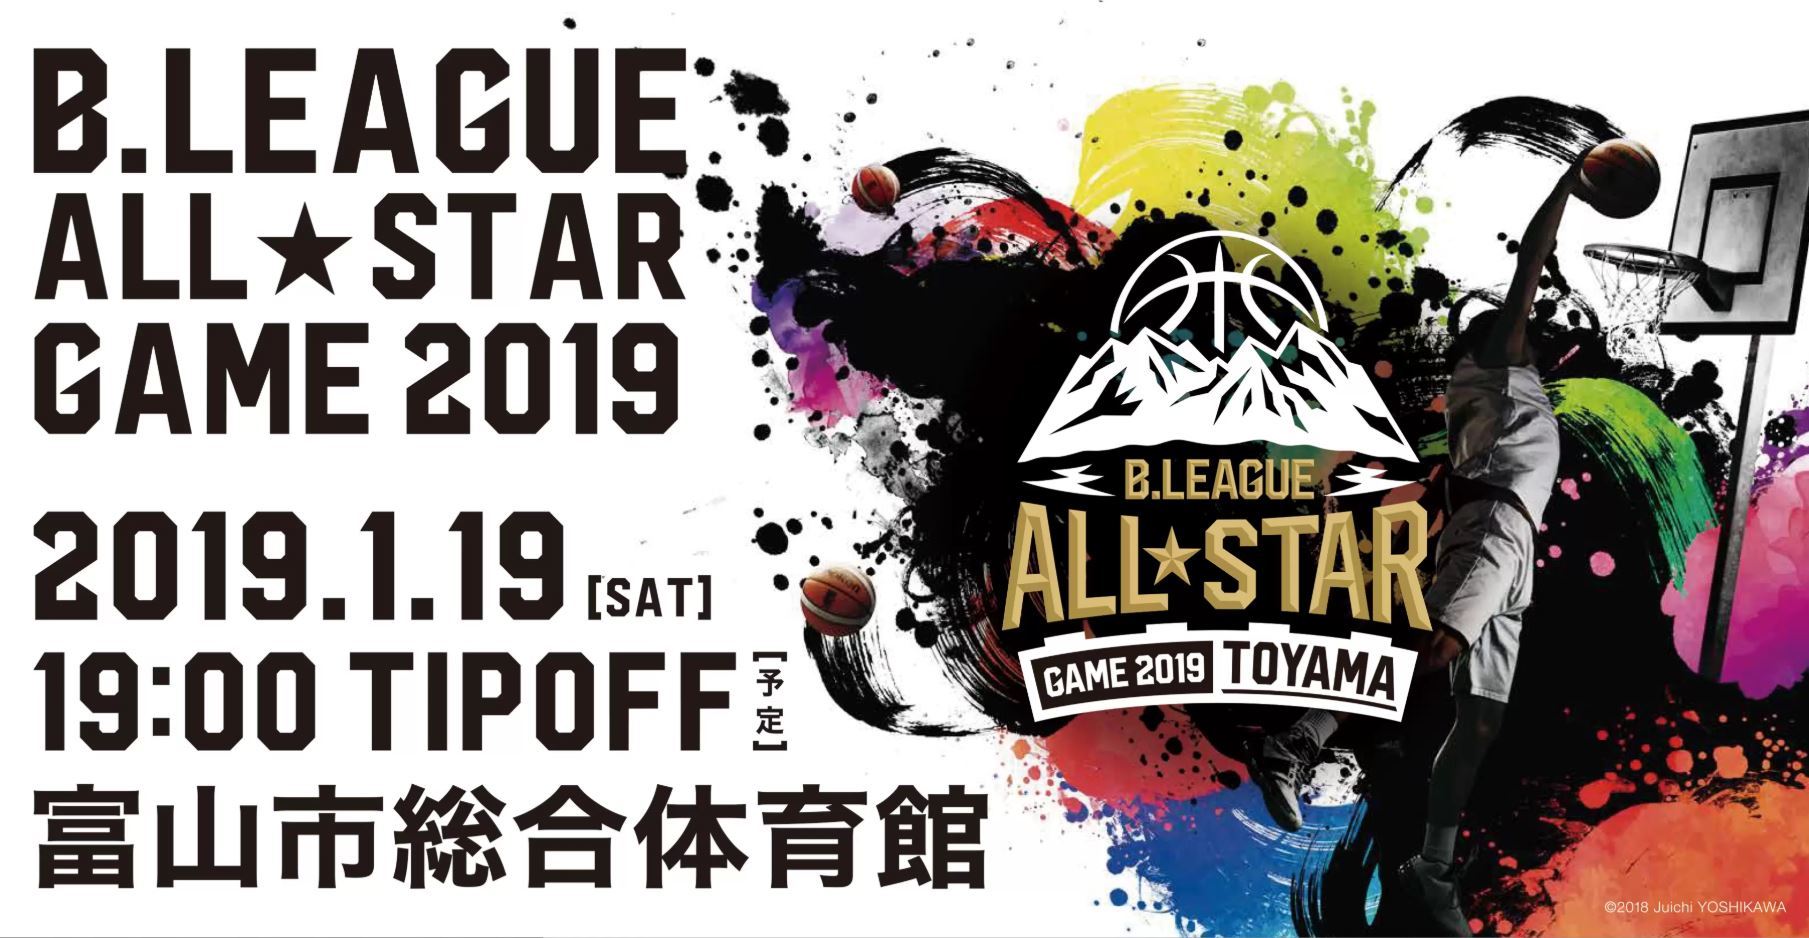 『B.LEAGUE ALL-STAR GAME 2019』は富山市総合体育館で開催される